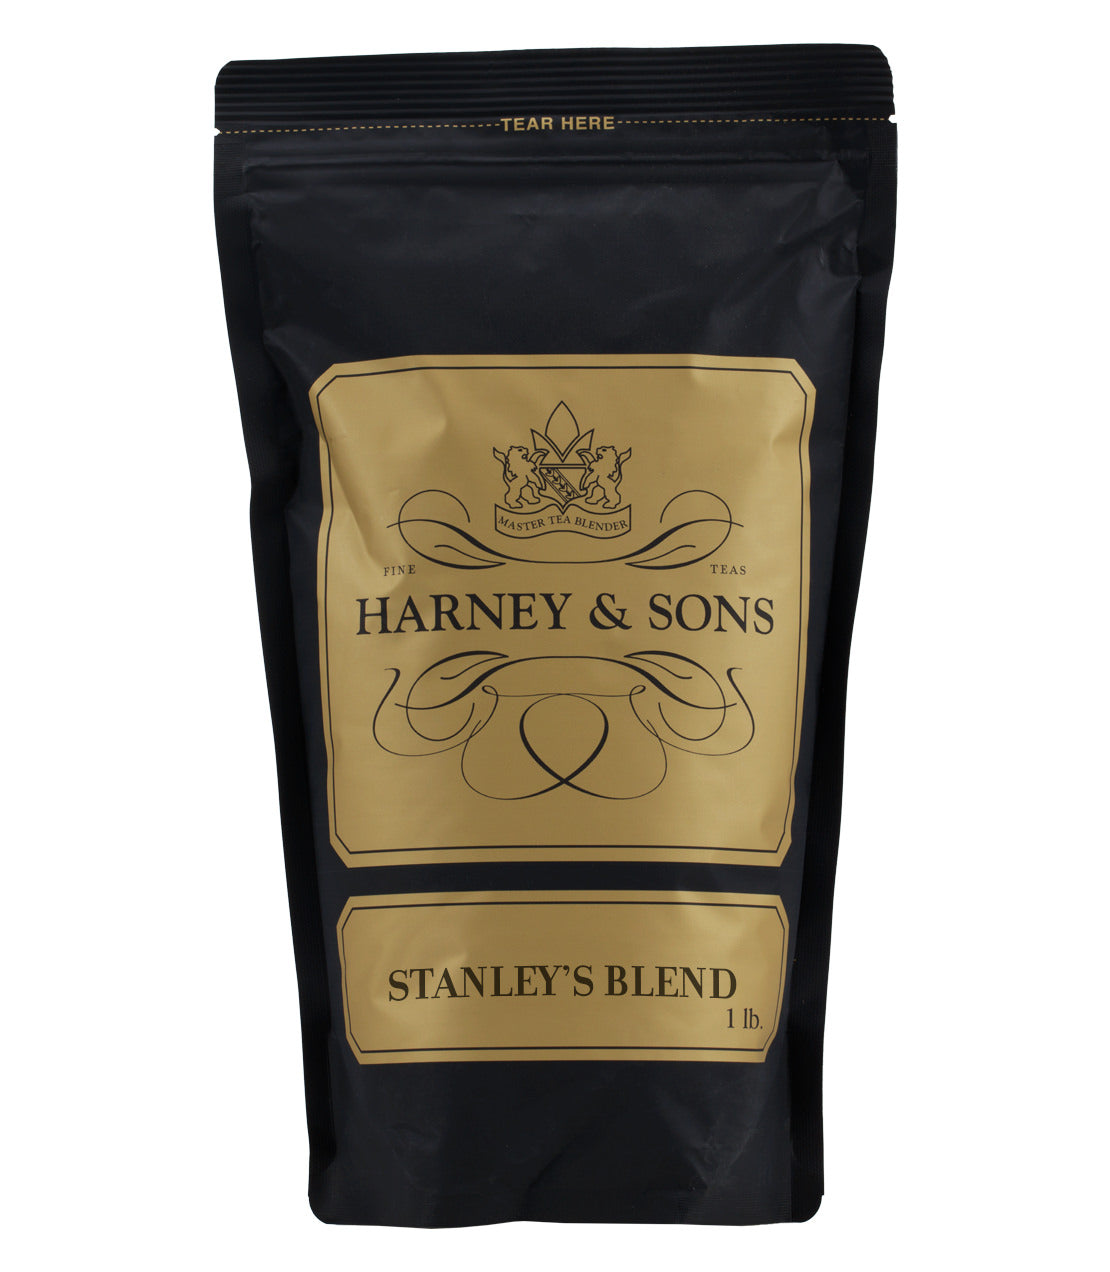 Stanley's Blend - Loose 1 lb. Bag - Harney & Sons Fine Teas